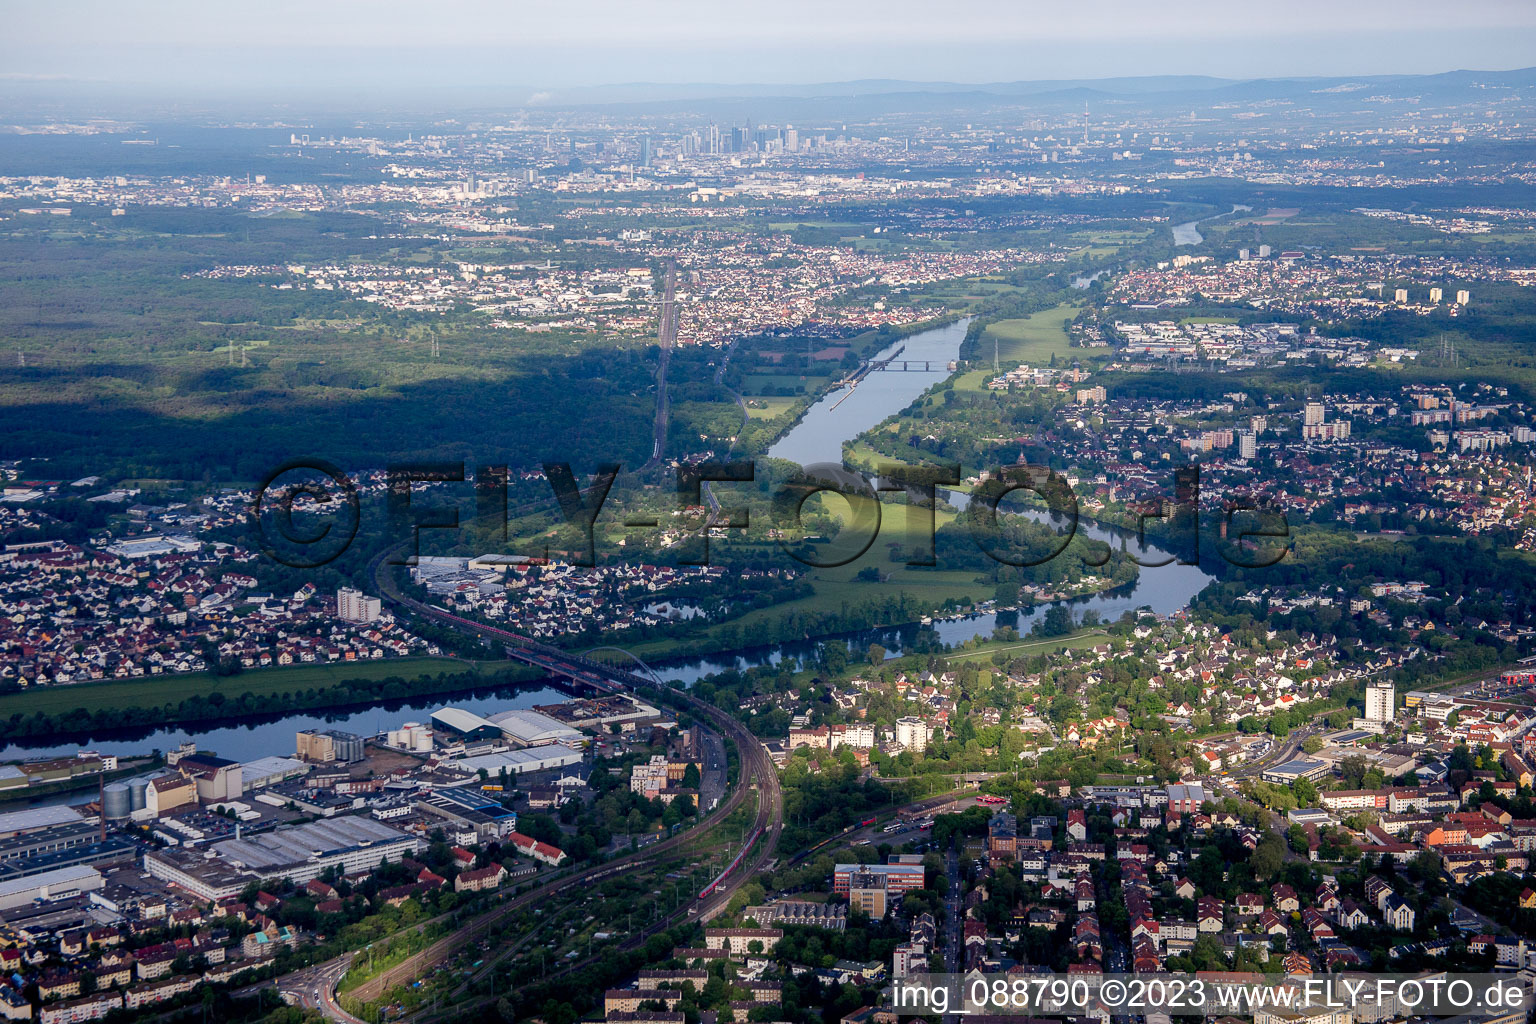 Aerial view of Hanau in the state Hesse, Germany